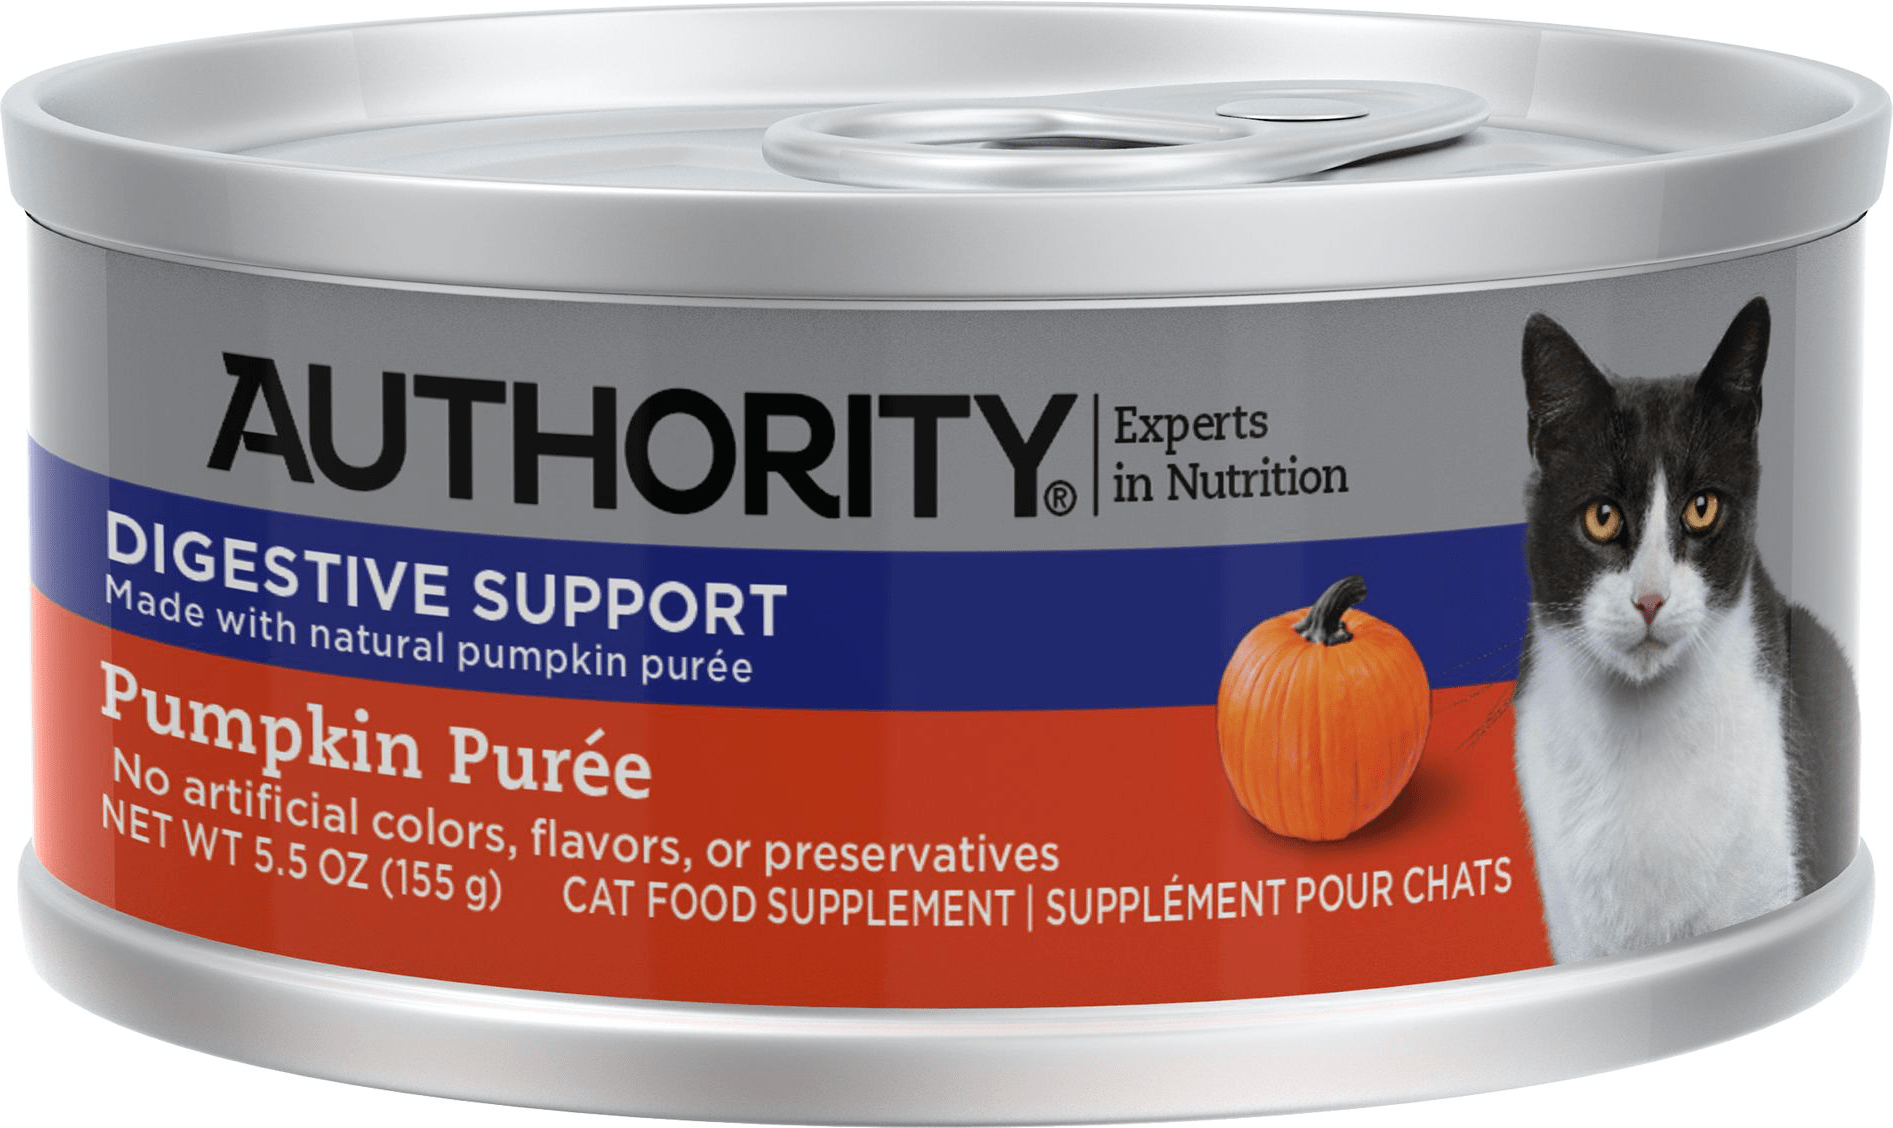 Authority Digestive Support Pumpkin Puree